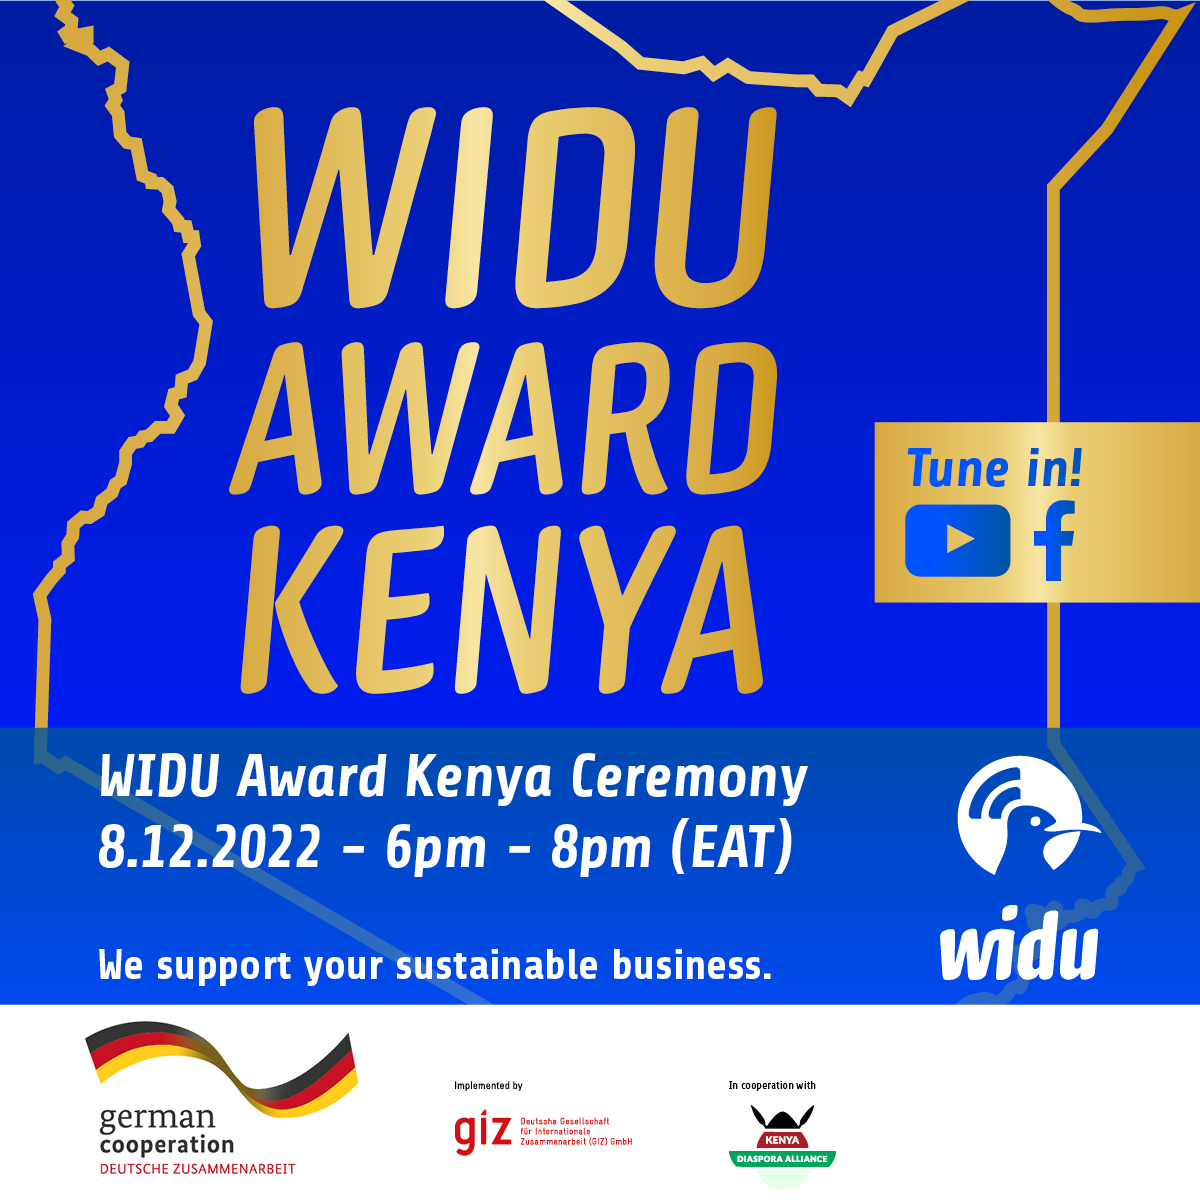 WIDU Award Kenya